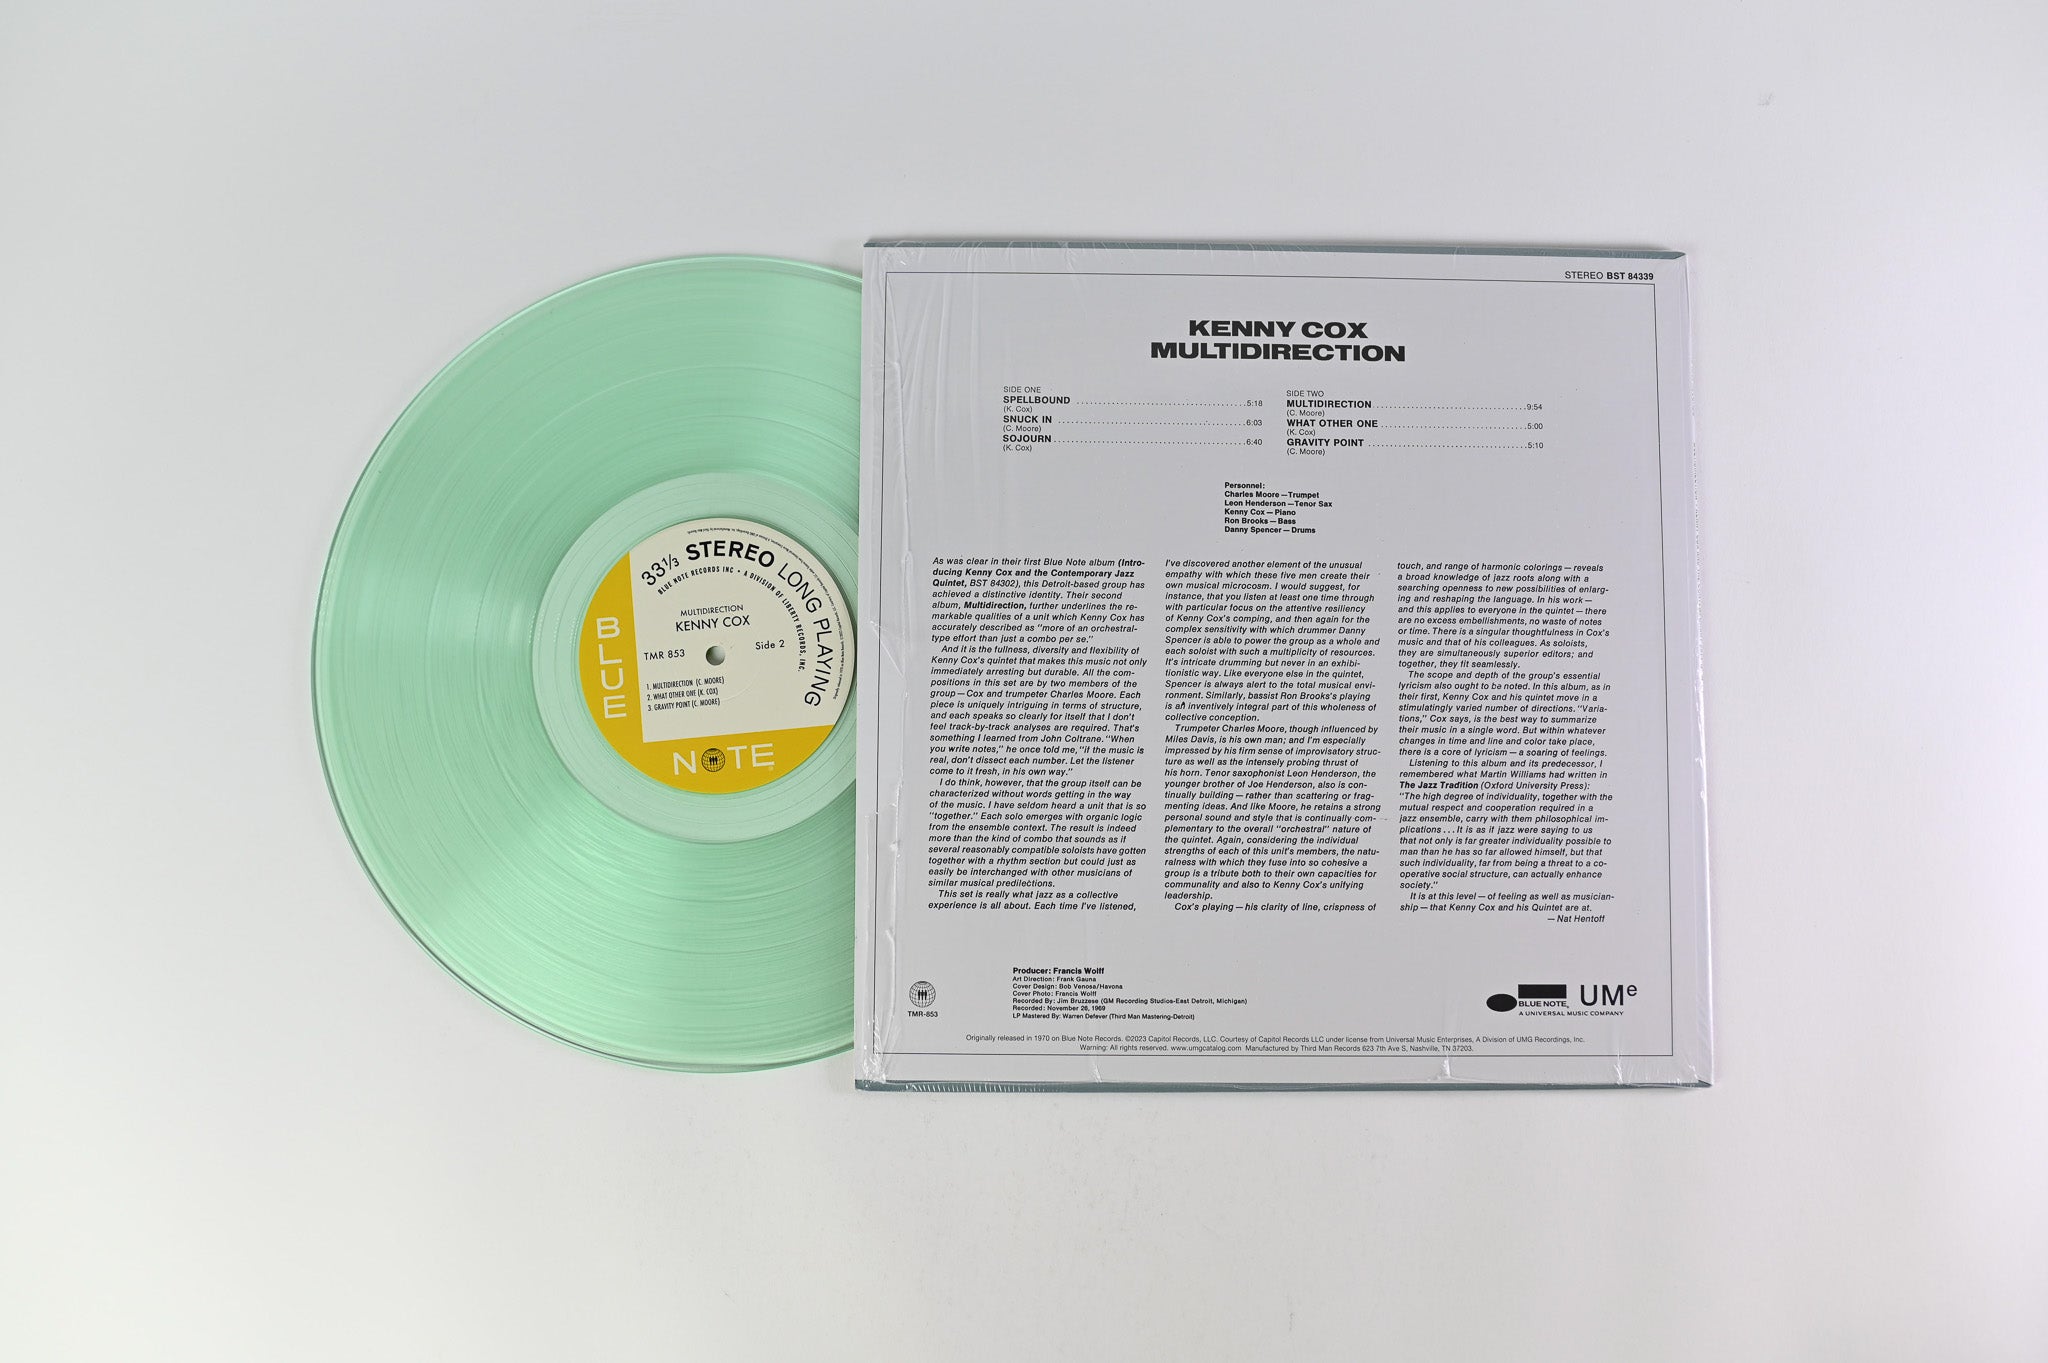 Kenny Cox - Multidirection on Blue Note Third Man Ltd Clear Vinyl Reissue